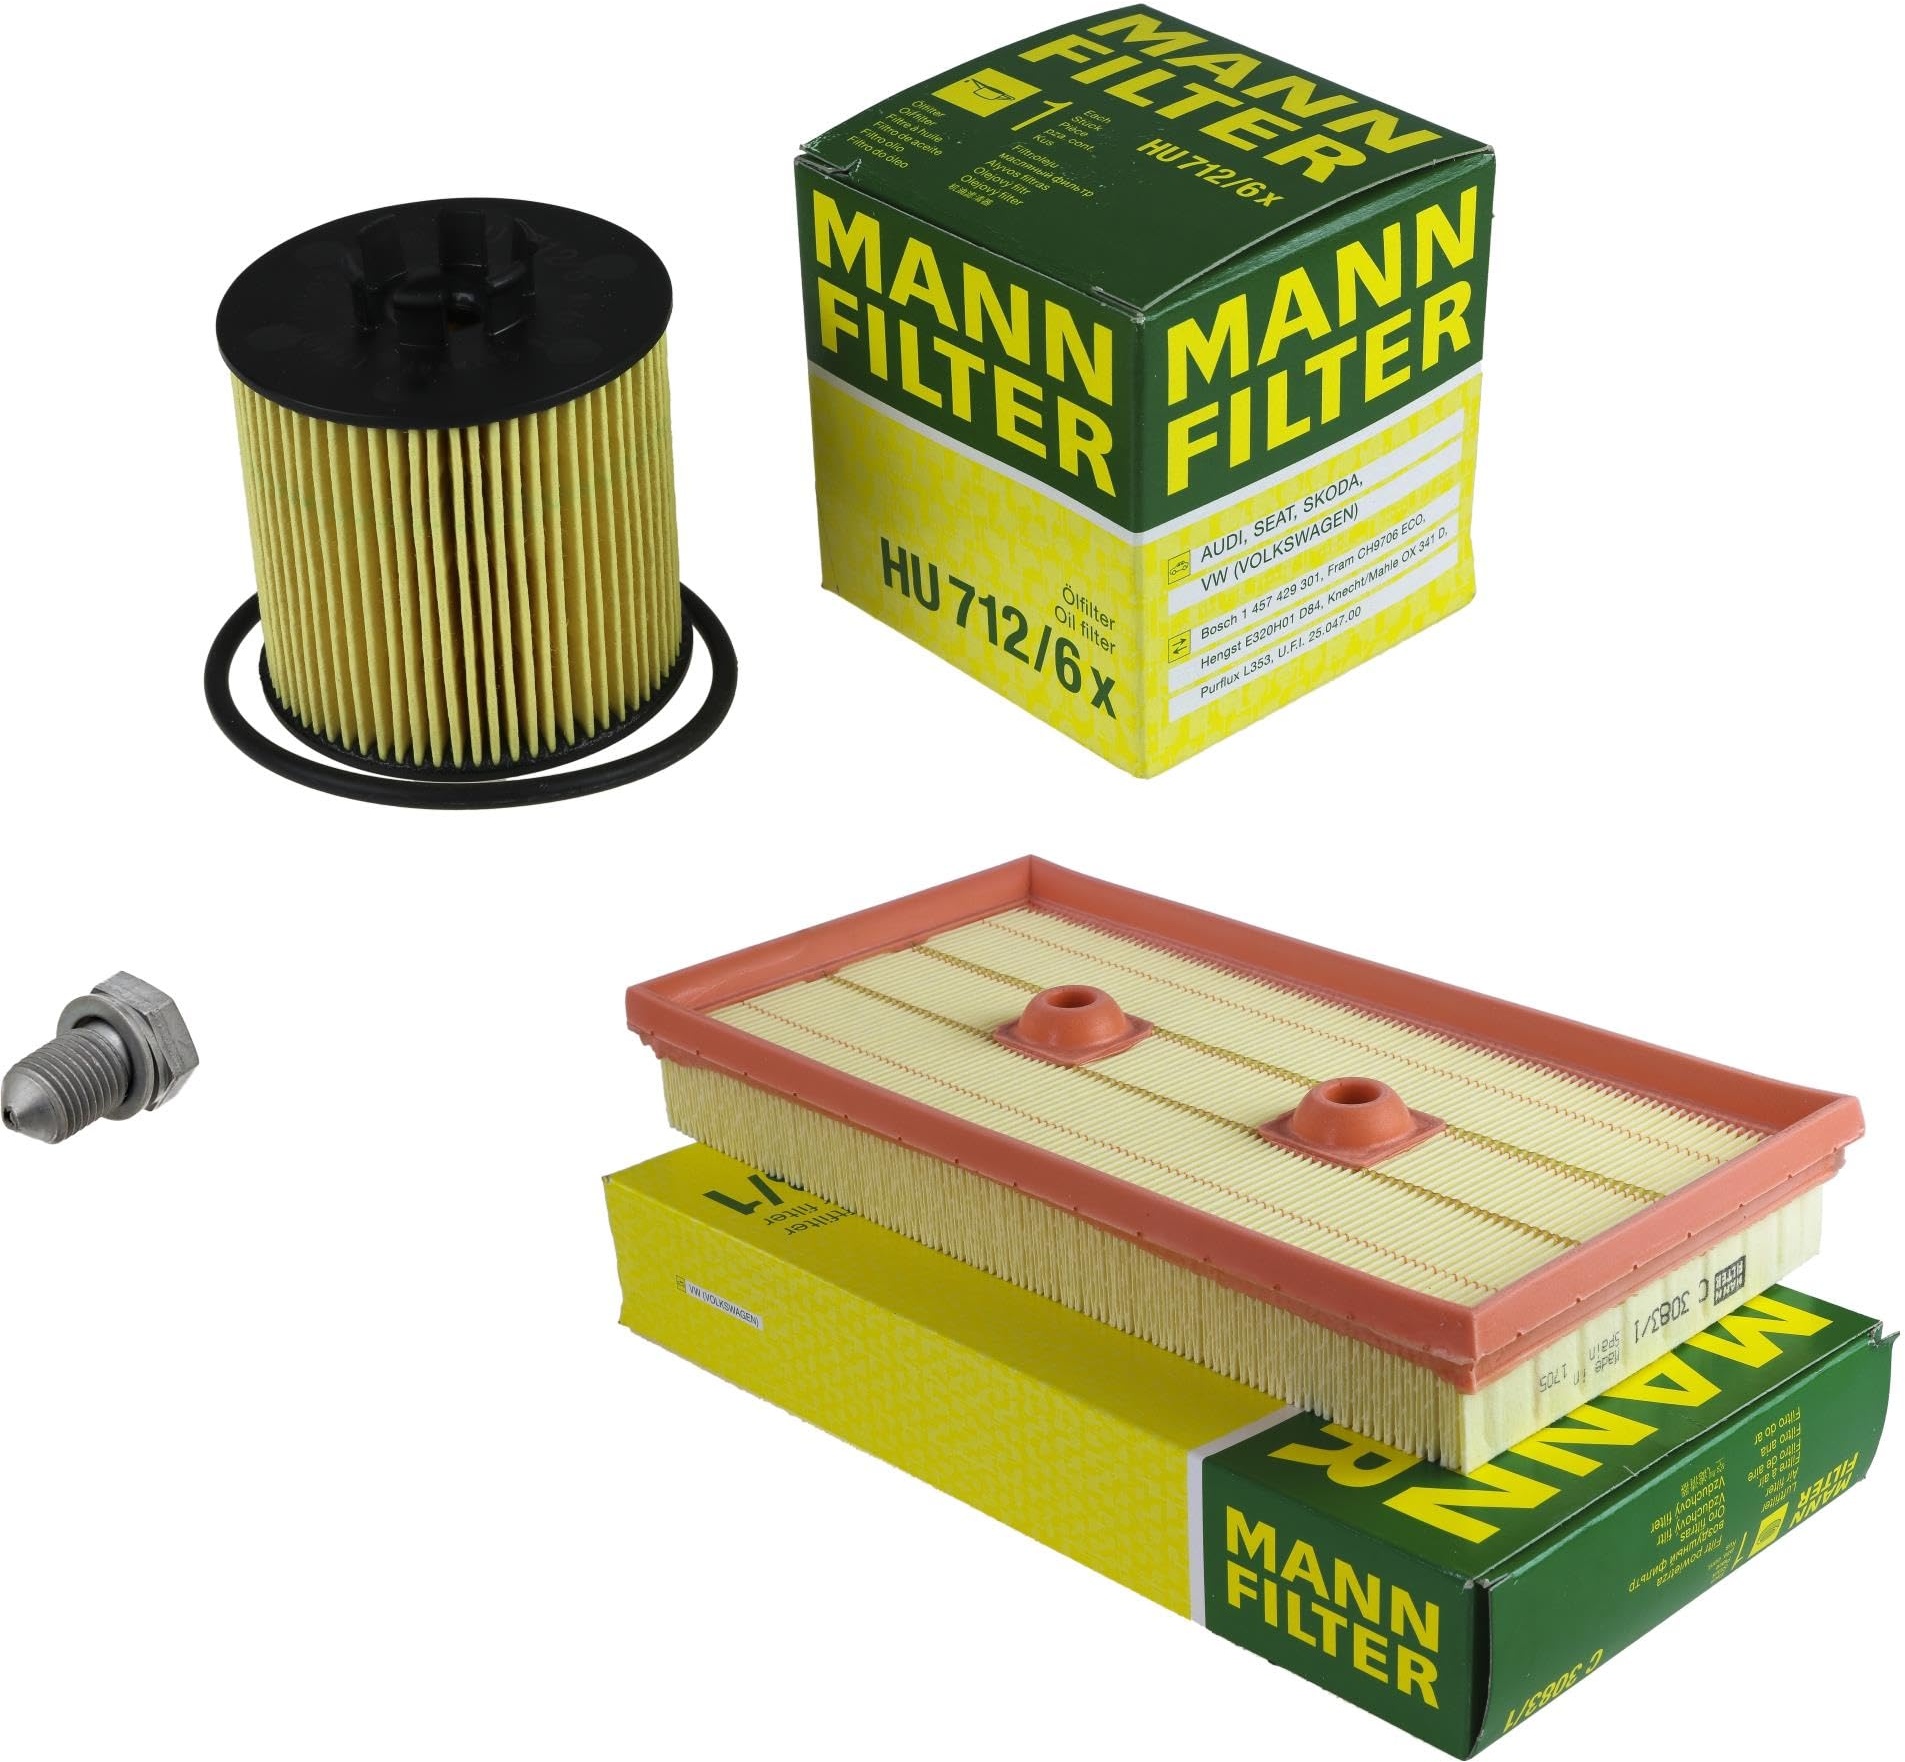 EISENFELS Filter Set Inspektionspaket erstellt mit MANN-FILTER Ölfilter HU 712/6 x, Luftfilter C 3083/1, Verschlussschraube